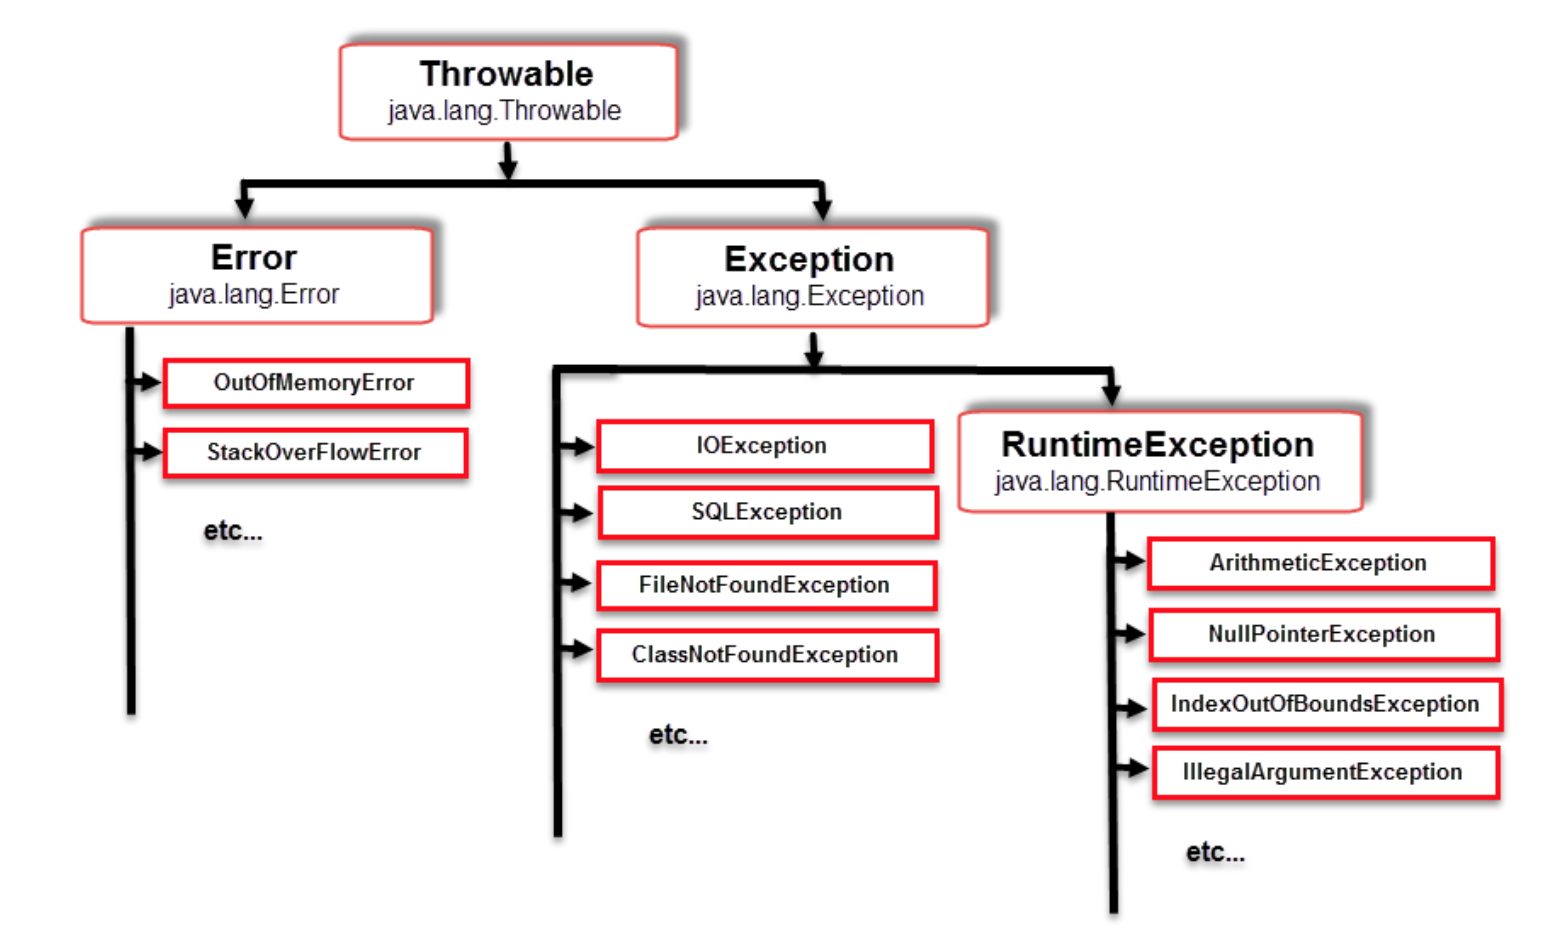 Java exceptionininitializererror. Иерархия наследования исключений java. Структура исключений java. Таблица исключений java. Дерево исключений java.